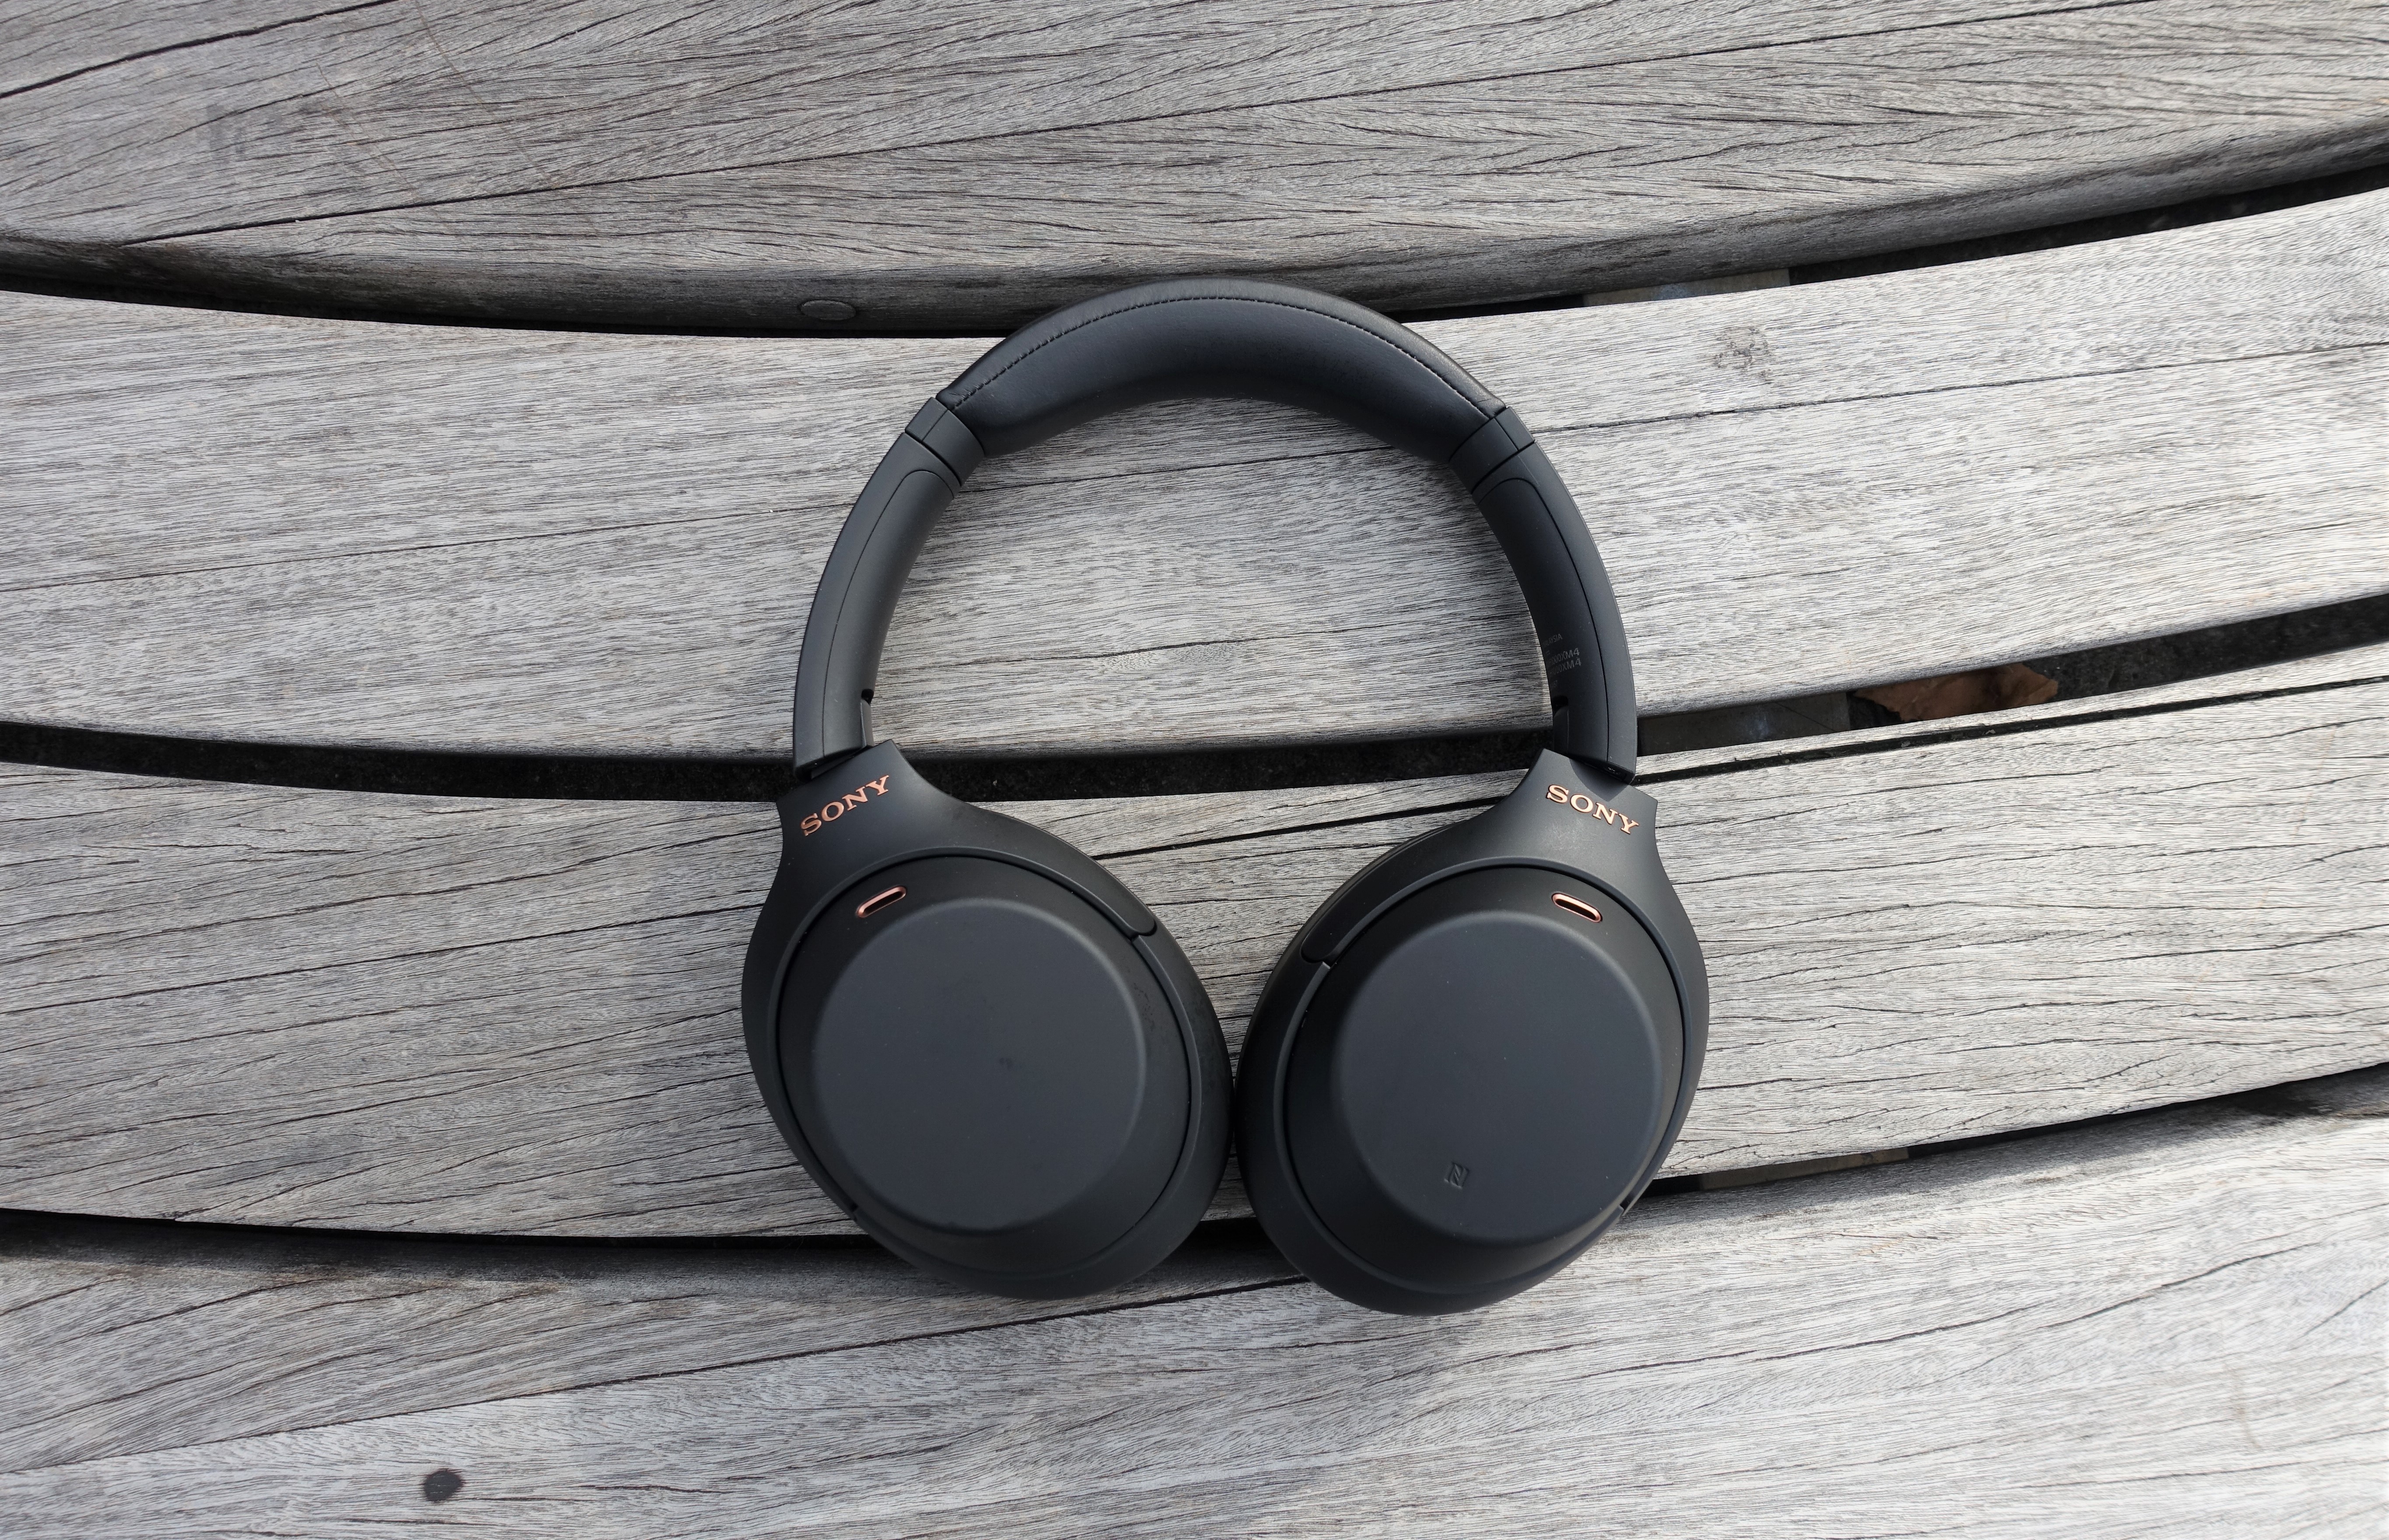 The 9 best noise canceling headphones